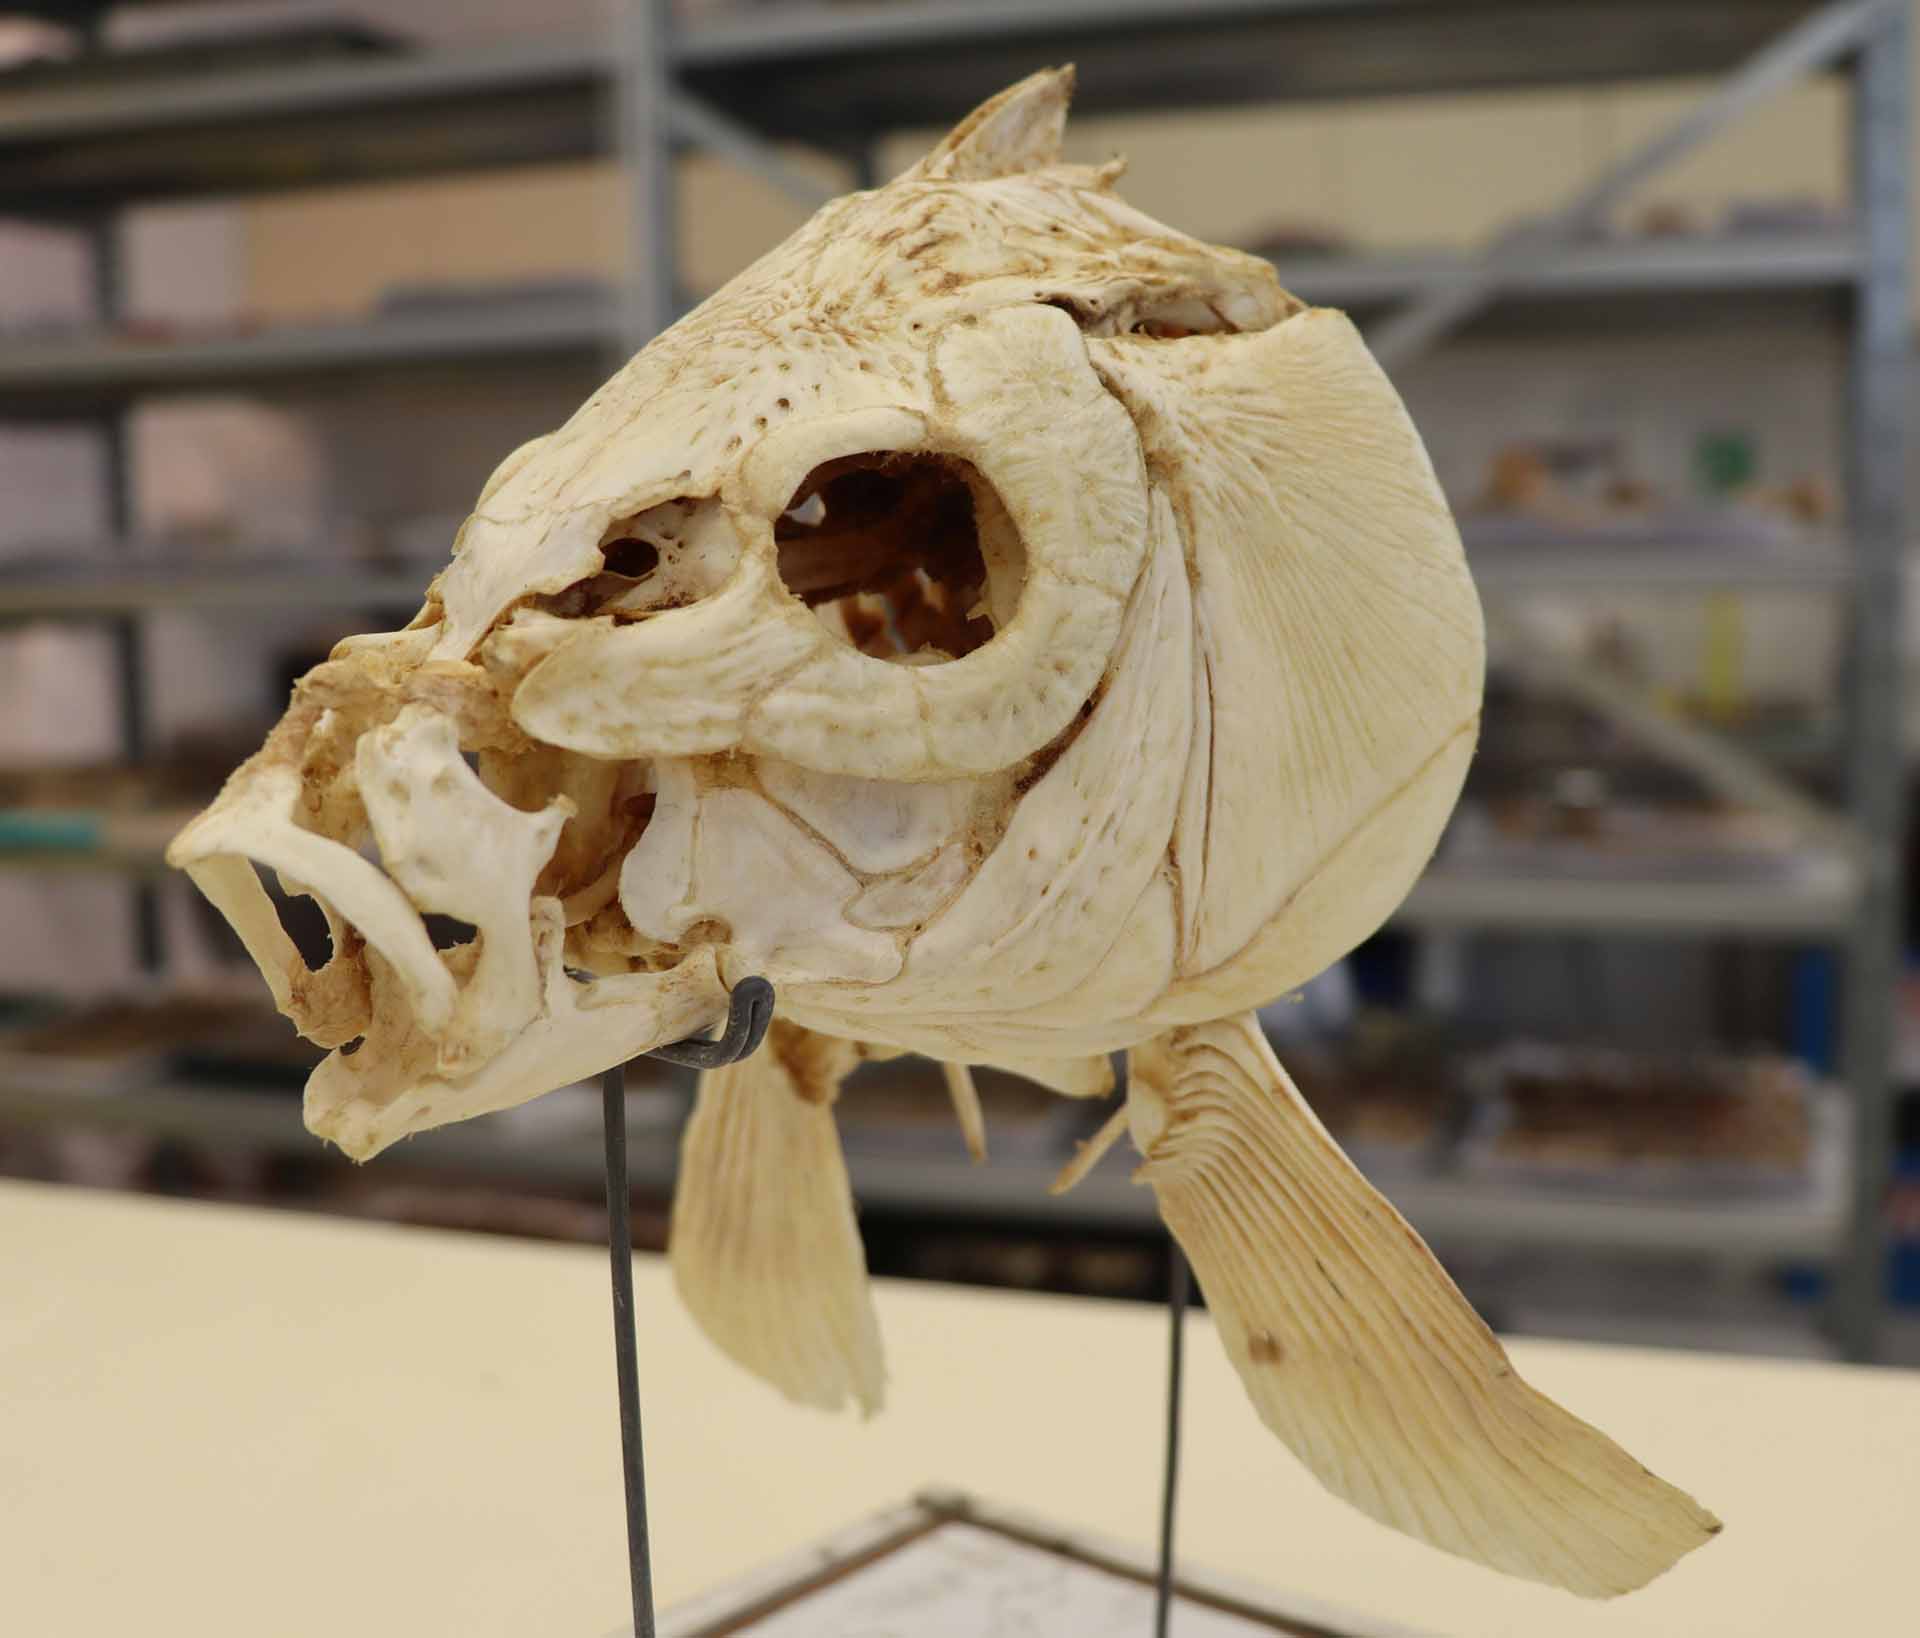 Un ejemplo del cráneo de una carpa moderna